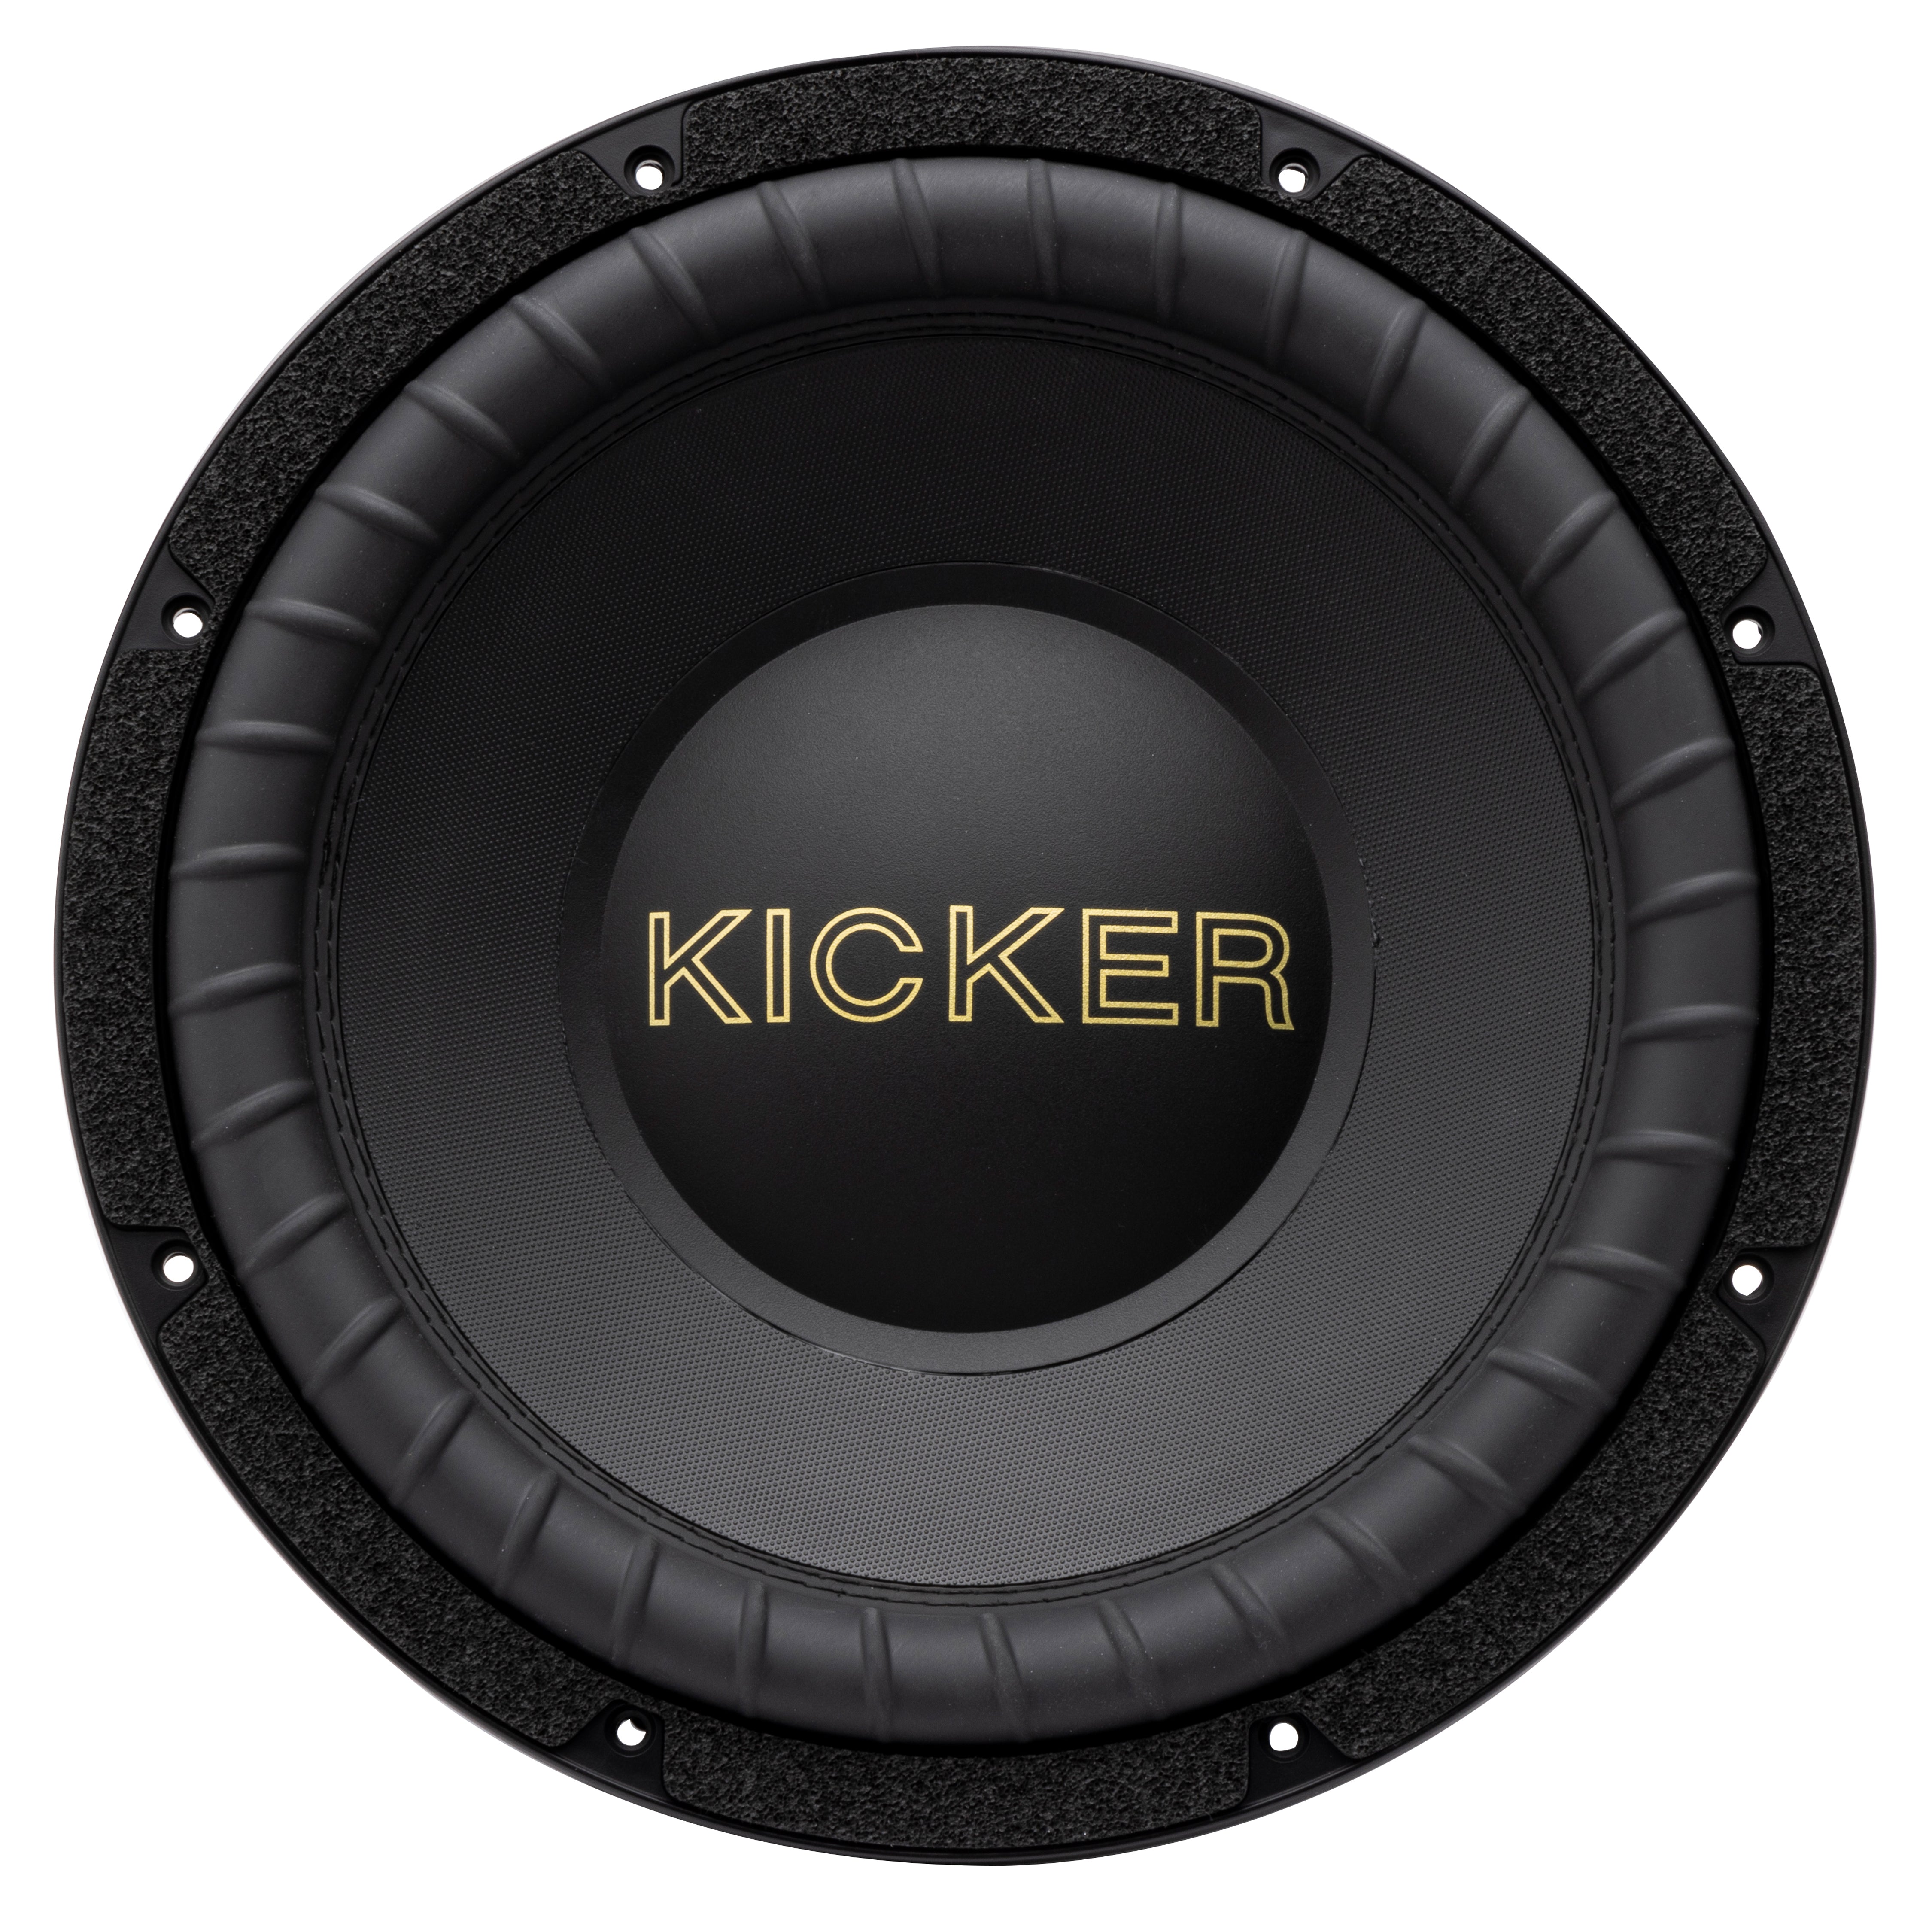 Kicker, Kicker GOLD154, Gold 50th Anniversary 15" DVC 4 Ohm Subwoofer, 800W (50GOLD154)